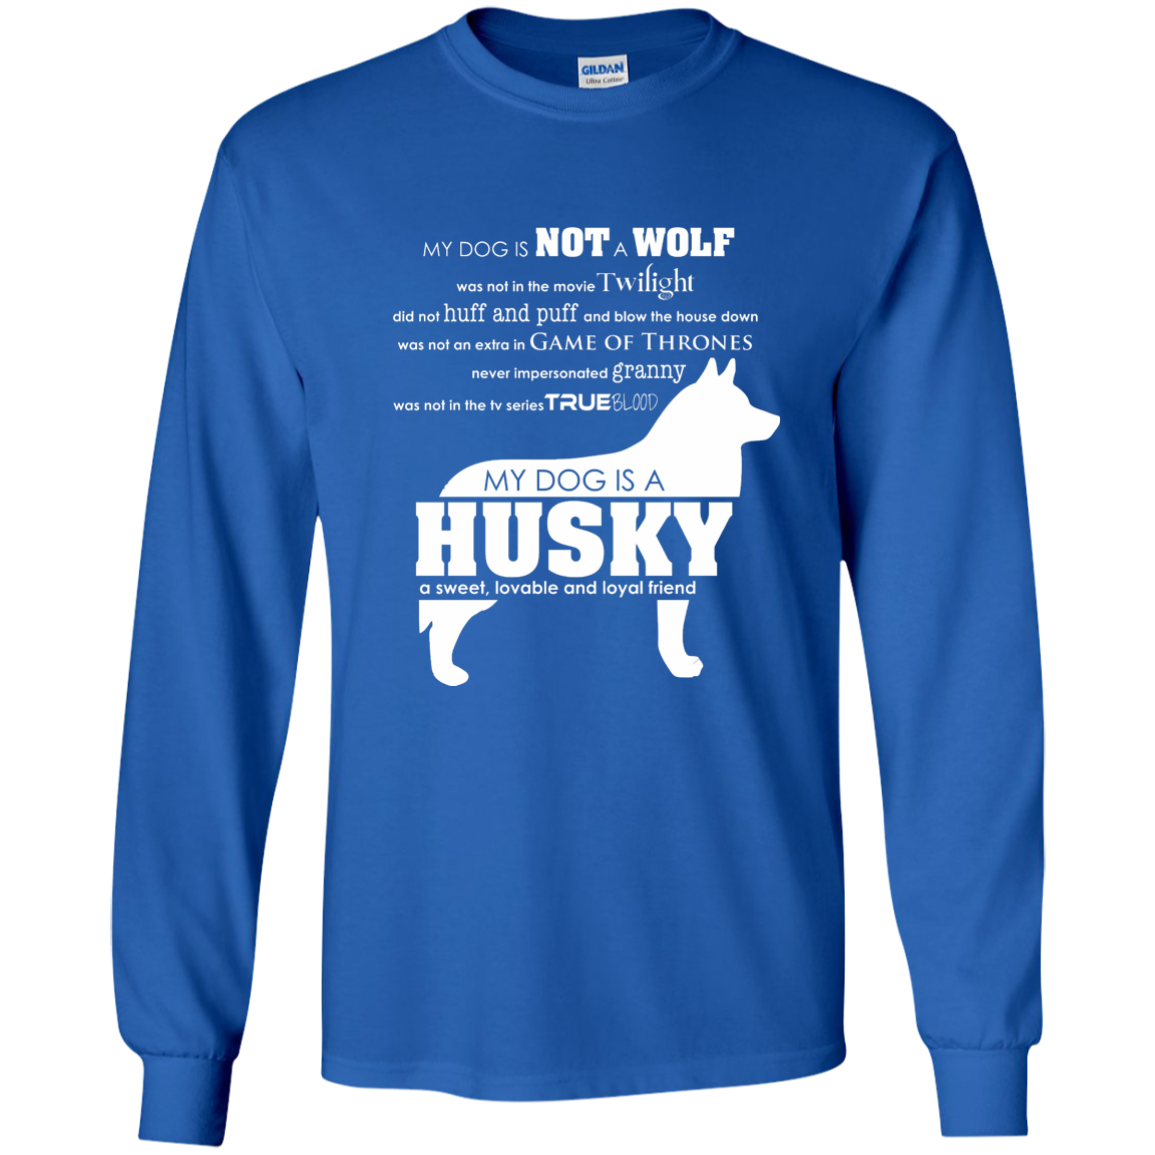 My Dog is Not a Wolf, My Dog is a Husky - Longsleeve Tshirt